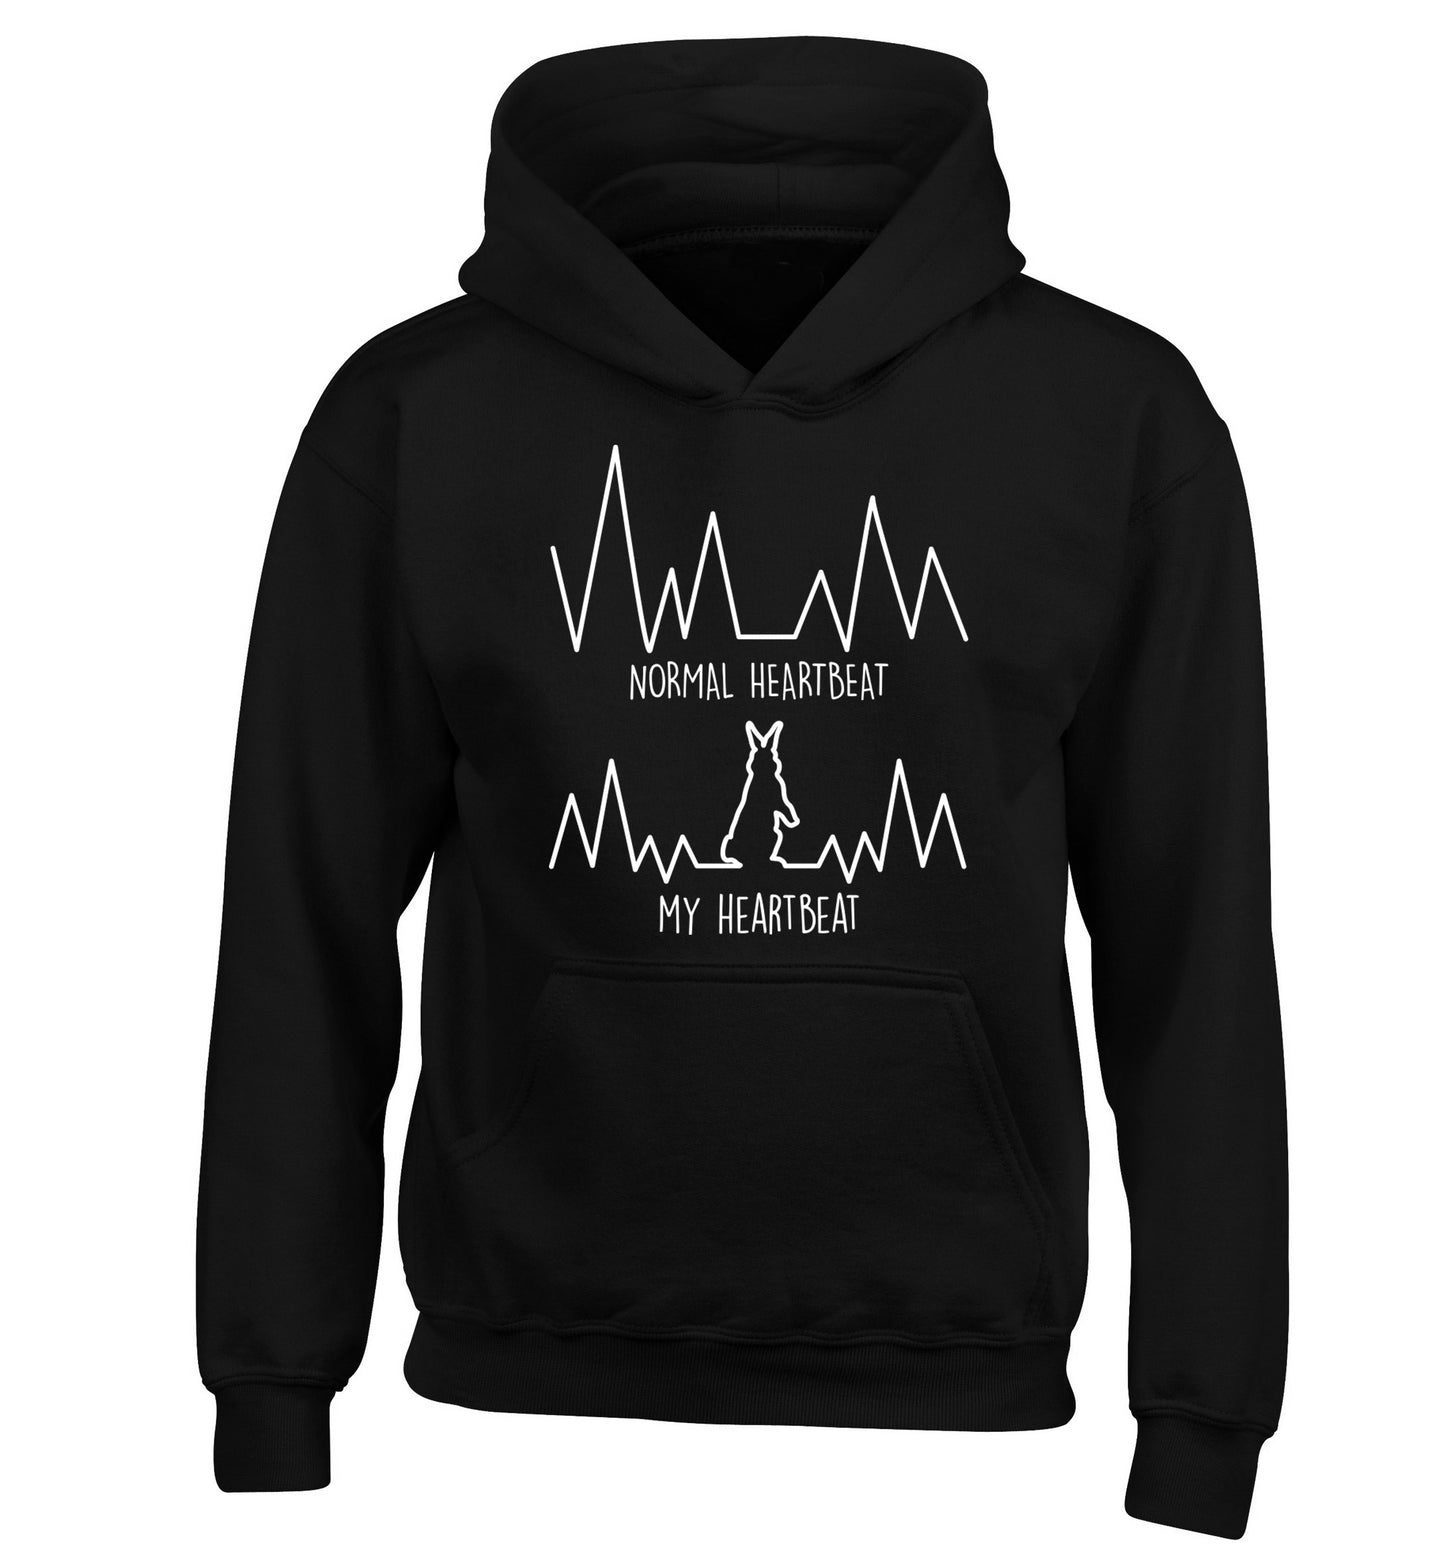 Normal heartbeat, my heartbeat rabbit lover children's black hoodie 12-14 Years